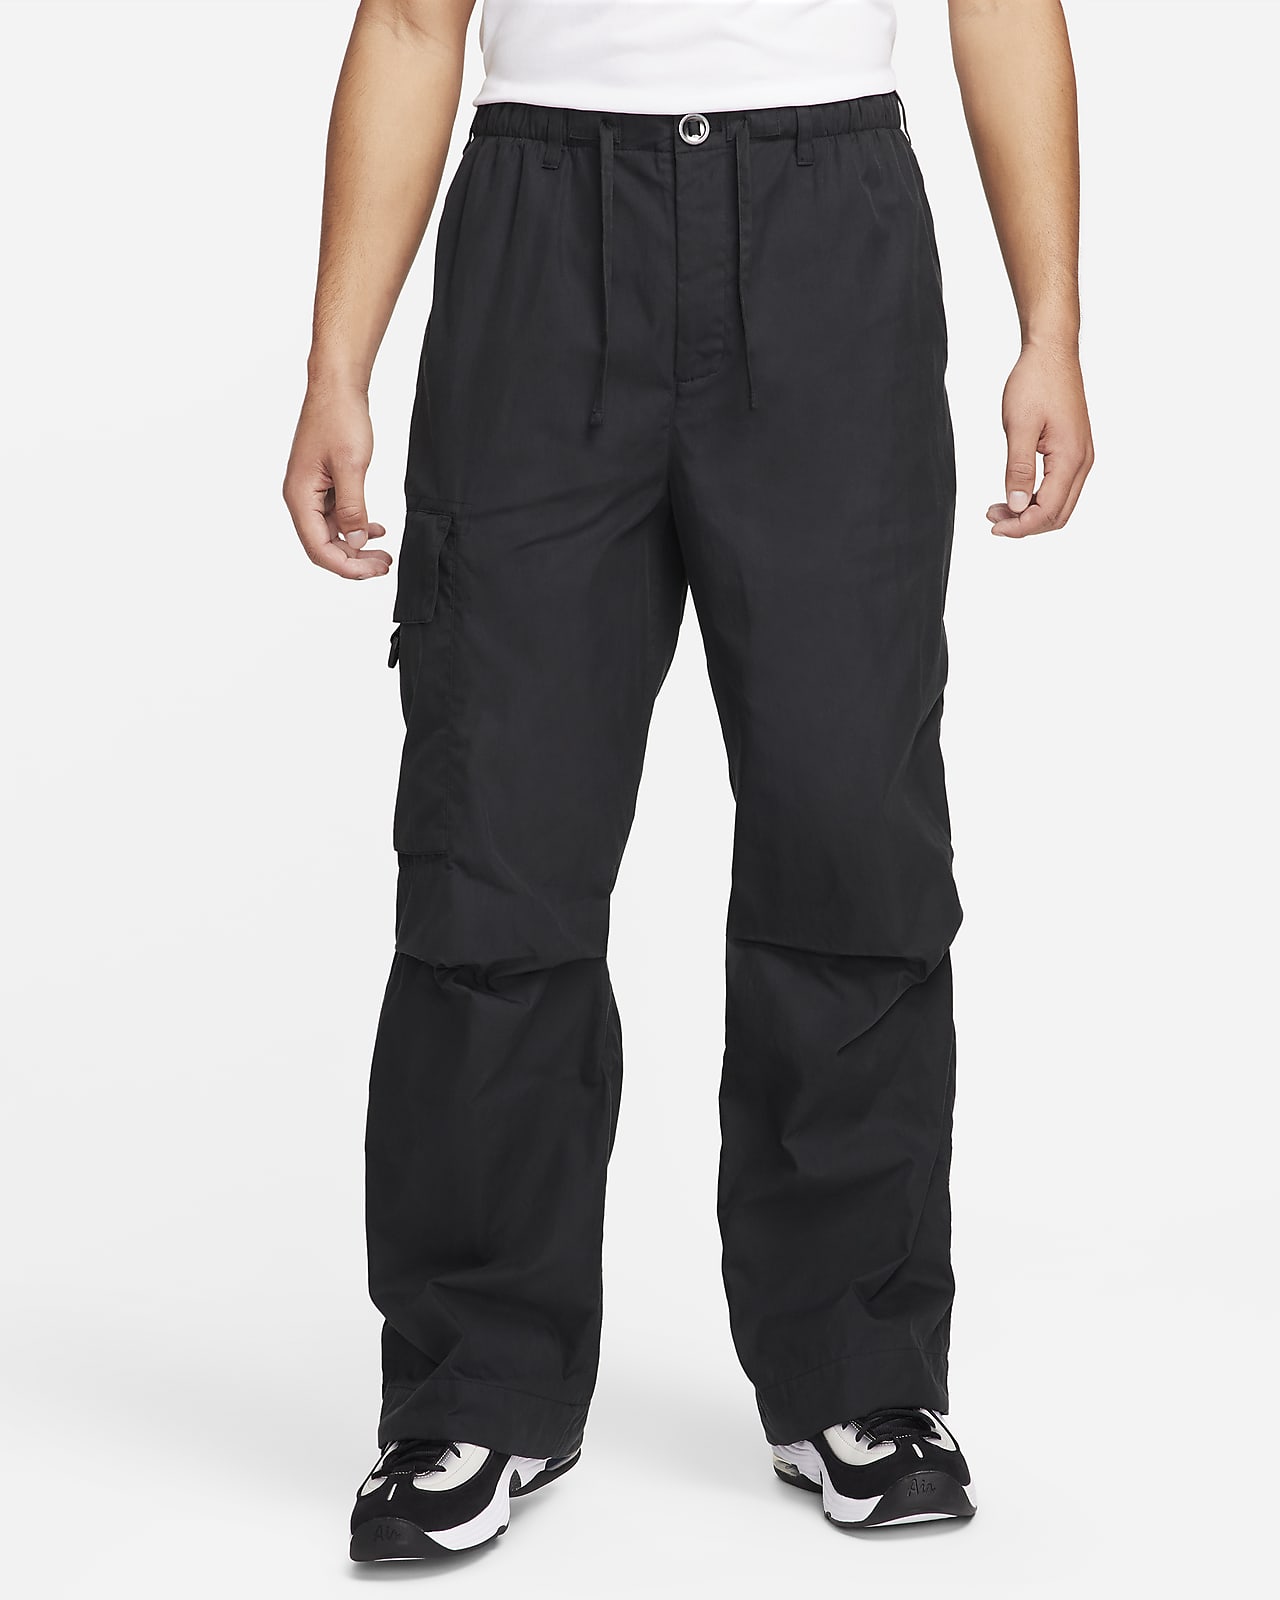 Nike Sportswear Men's Unlined Utility Cargo Pants, Black, Medium at Amazon  Men's Clothing store